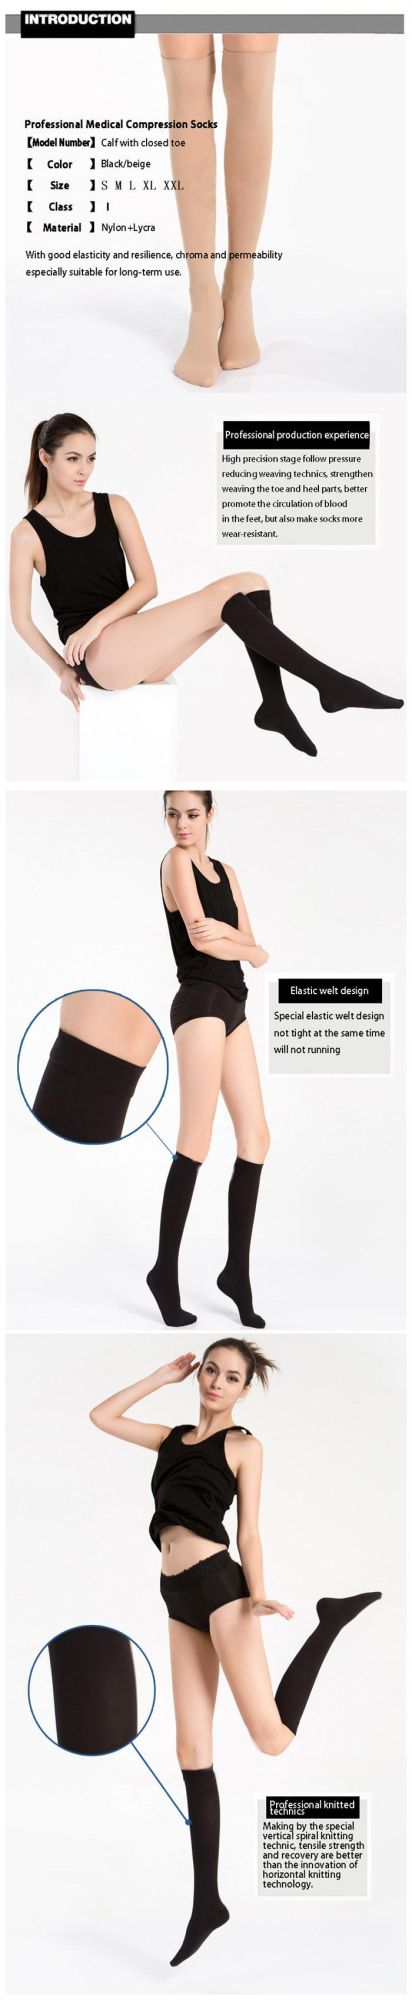 High Elastic Nylon Anti Embolism Compression Socks 23-32mmhg Stockings